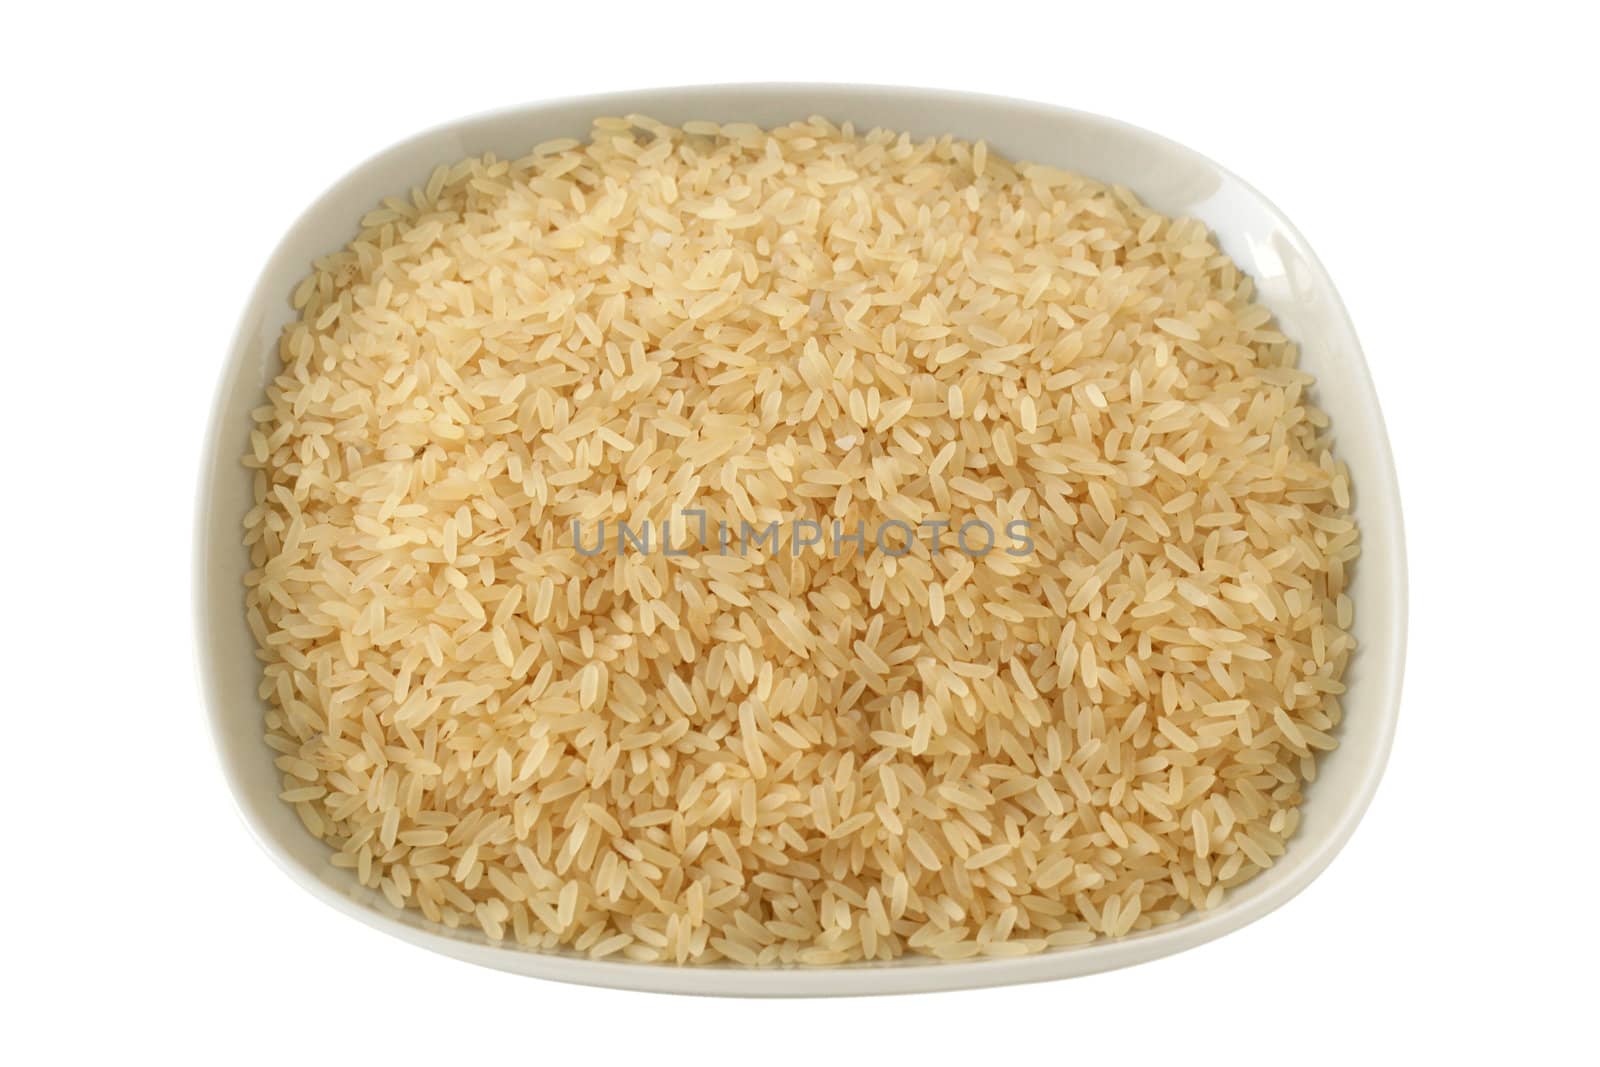 dry rice by nataliamylova